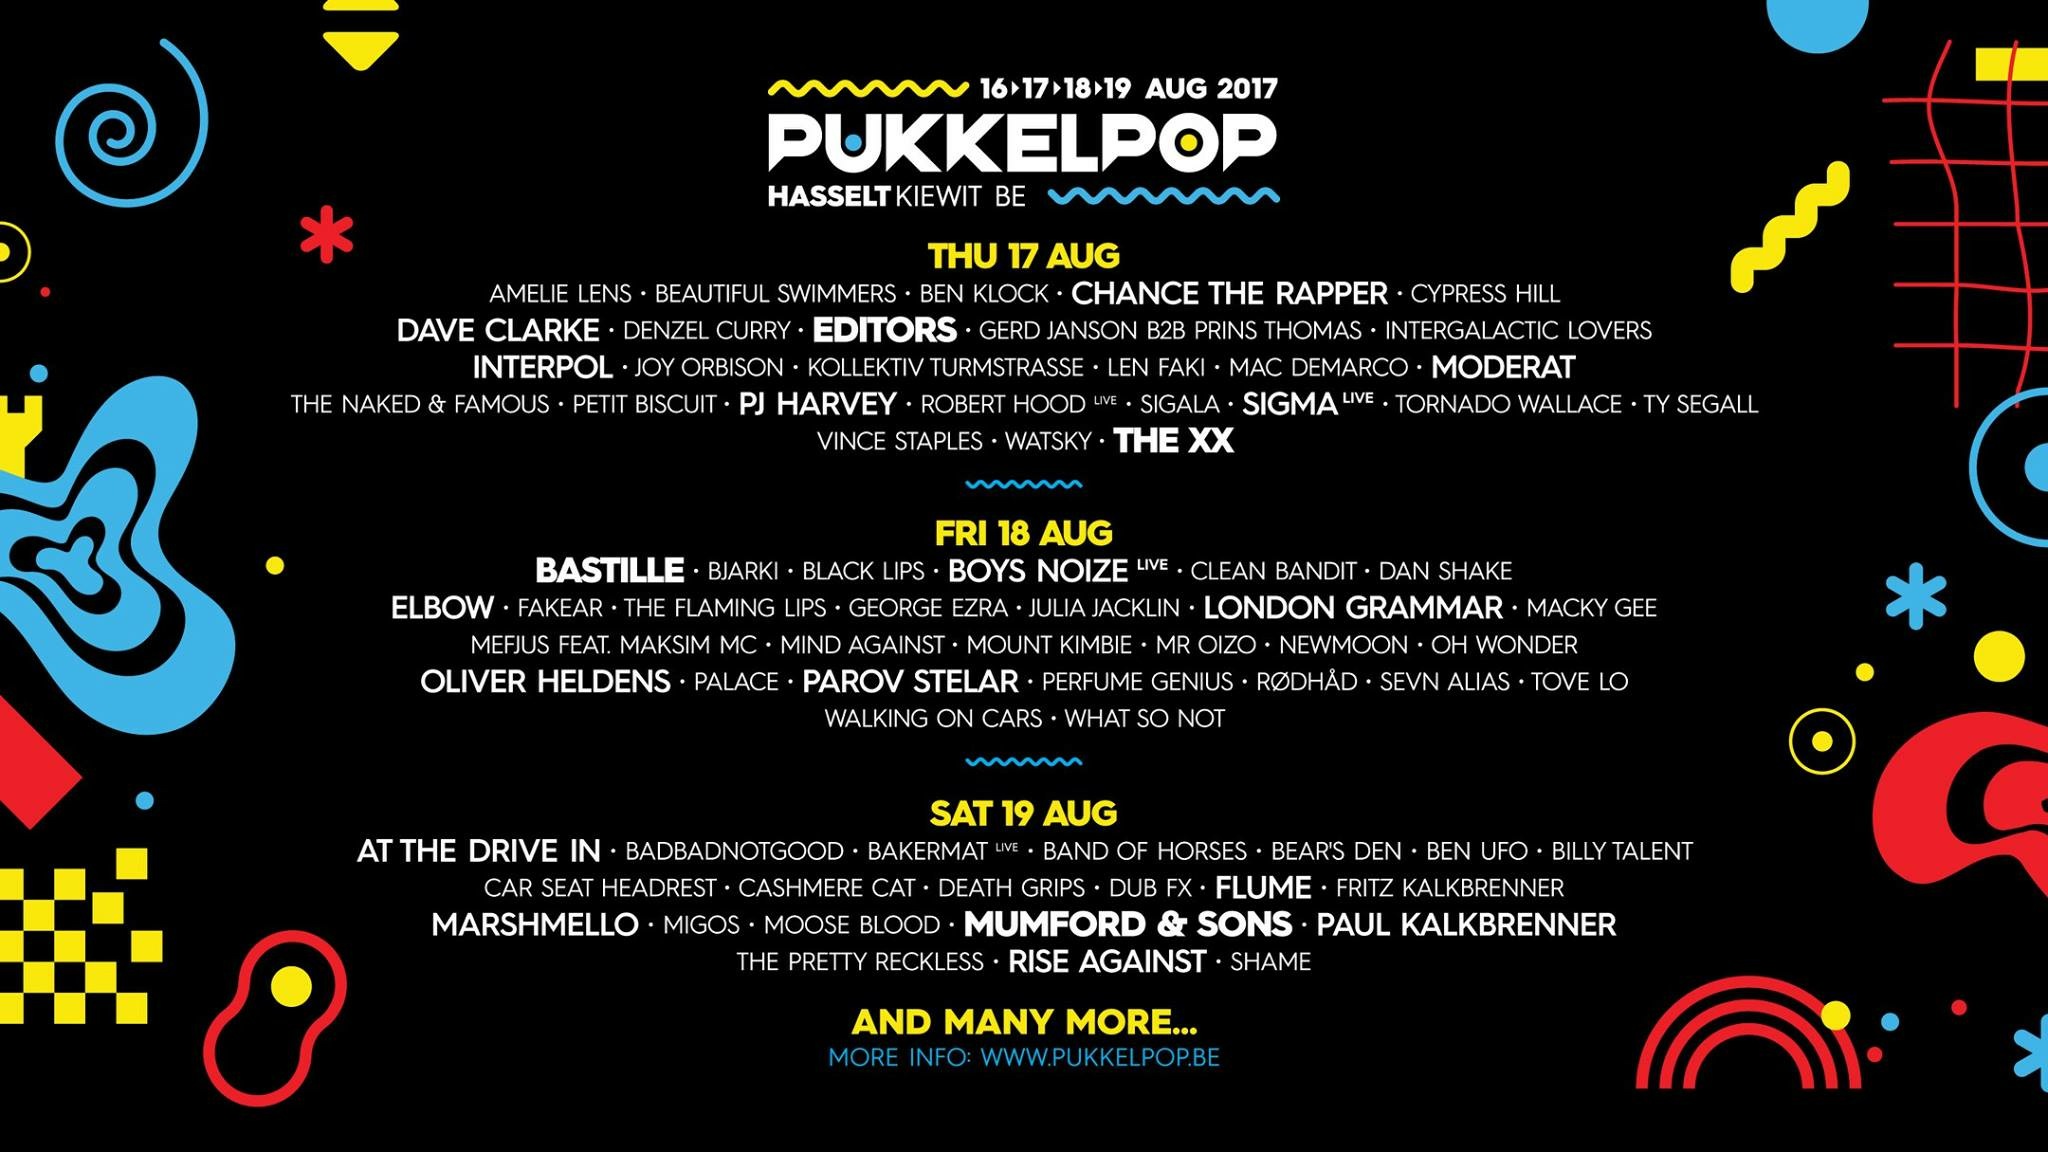 Pukkelpop 2017 - Tickets, line-up, timetable & info